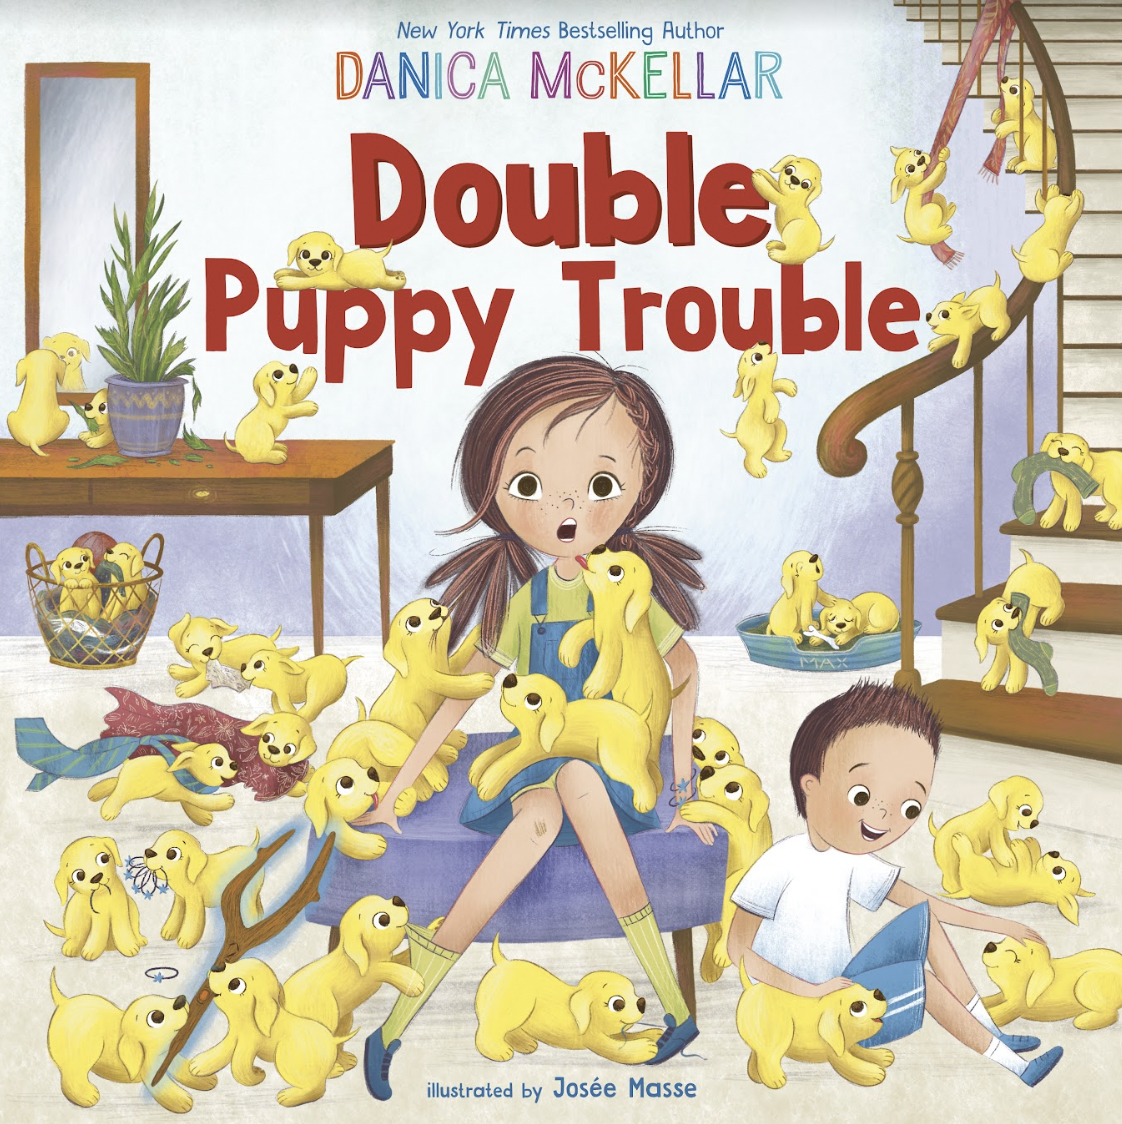 DOUBLE PUPPY TROUBLE by Danika McKellar